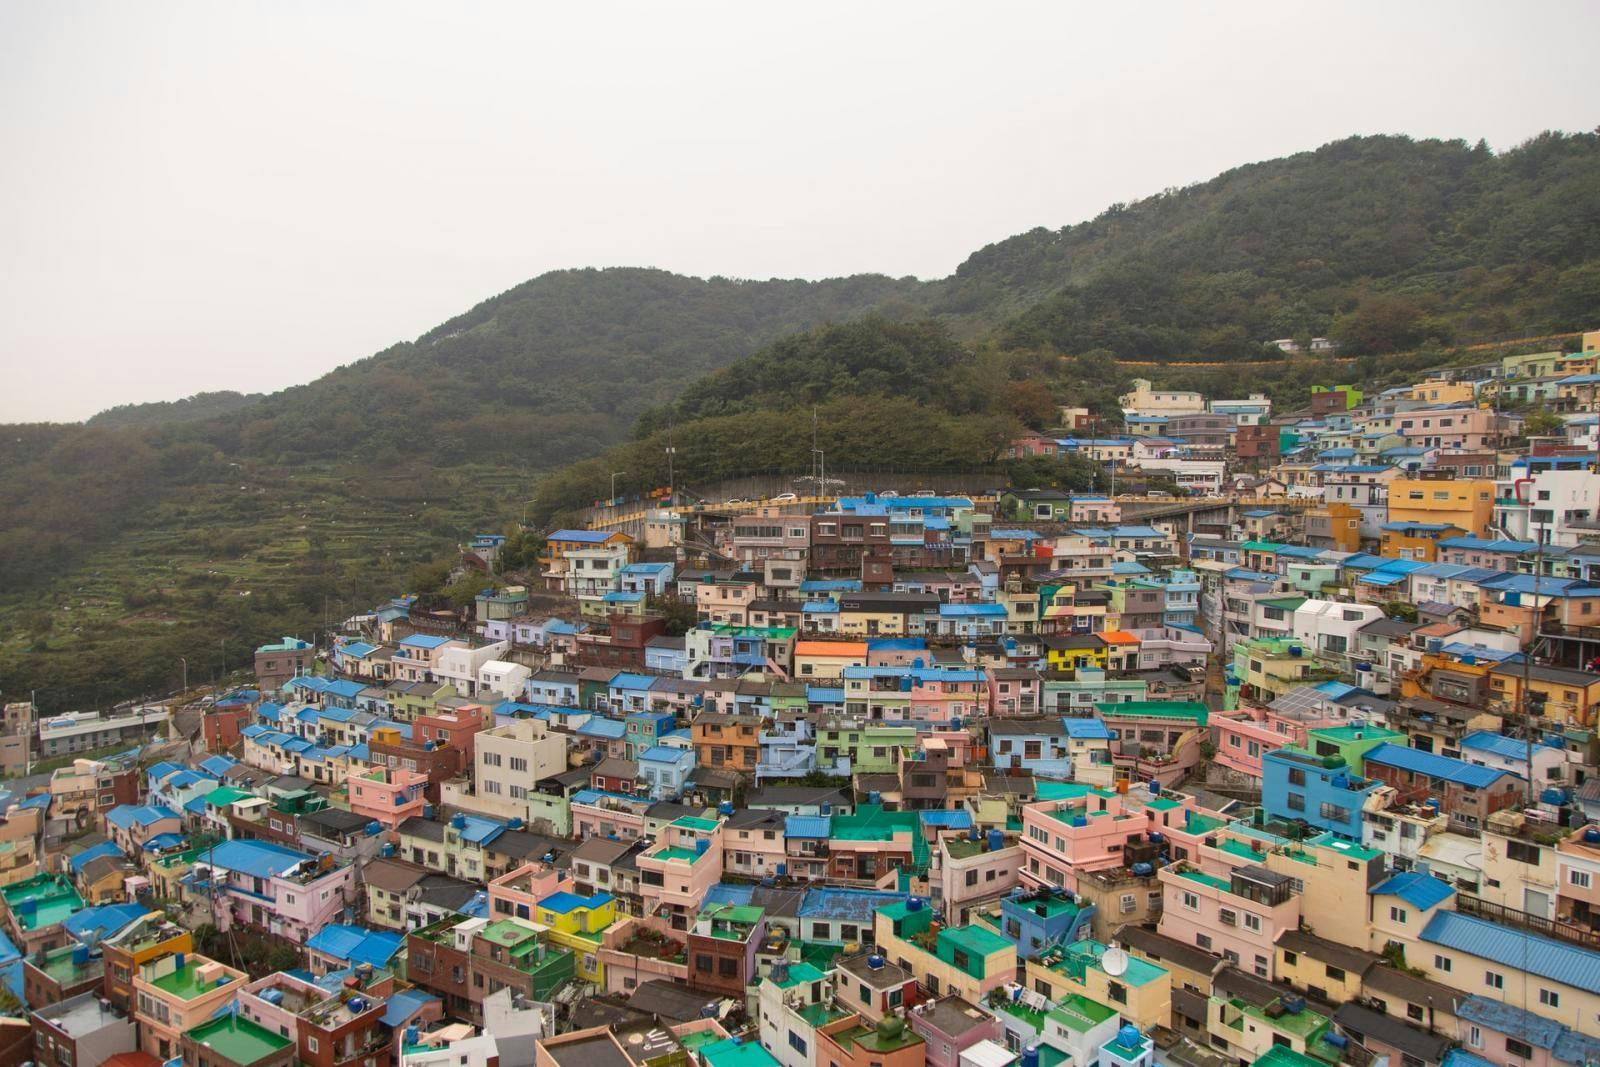 How Has the COVID-19 Response Impacted People Living in Slum Neighborhoods?